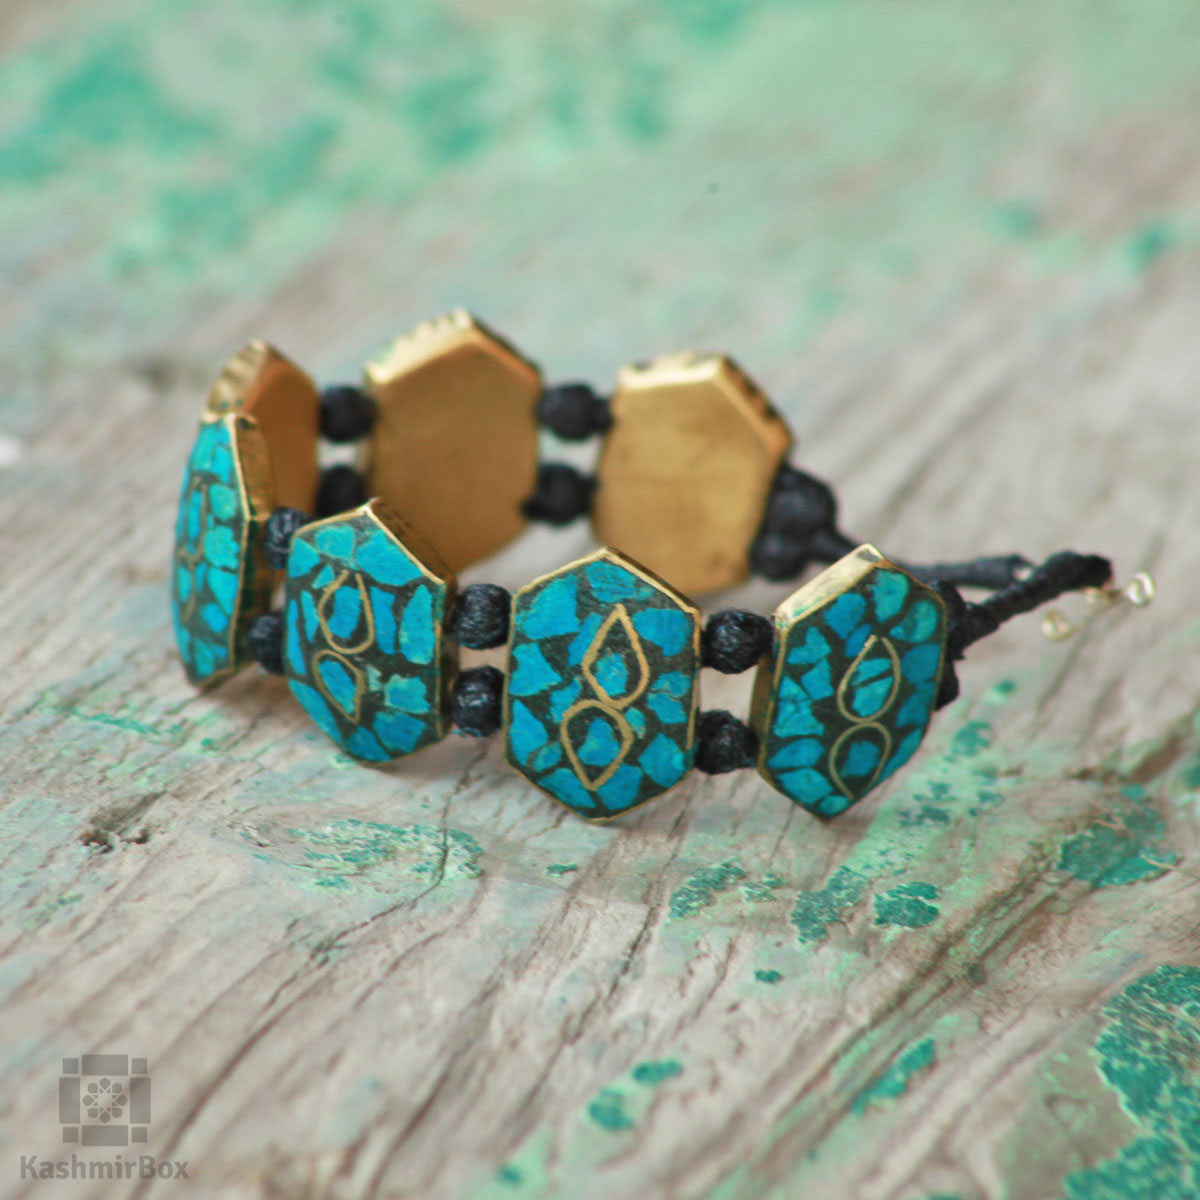 Ferozi Handcrafted Bracelet - KashmirBox.com